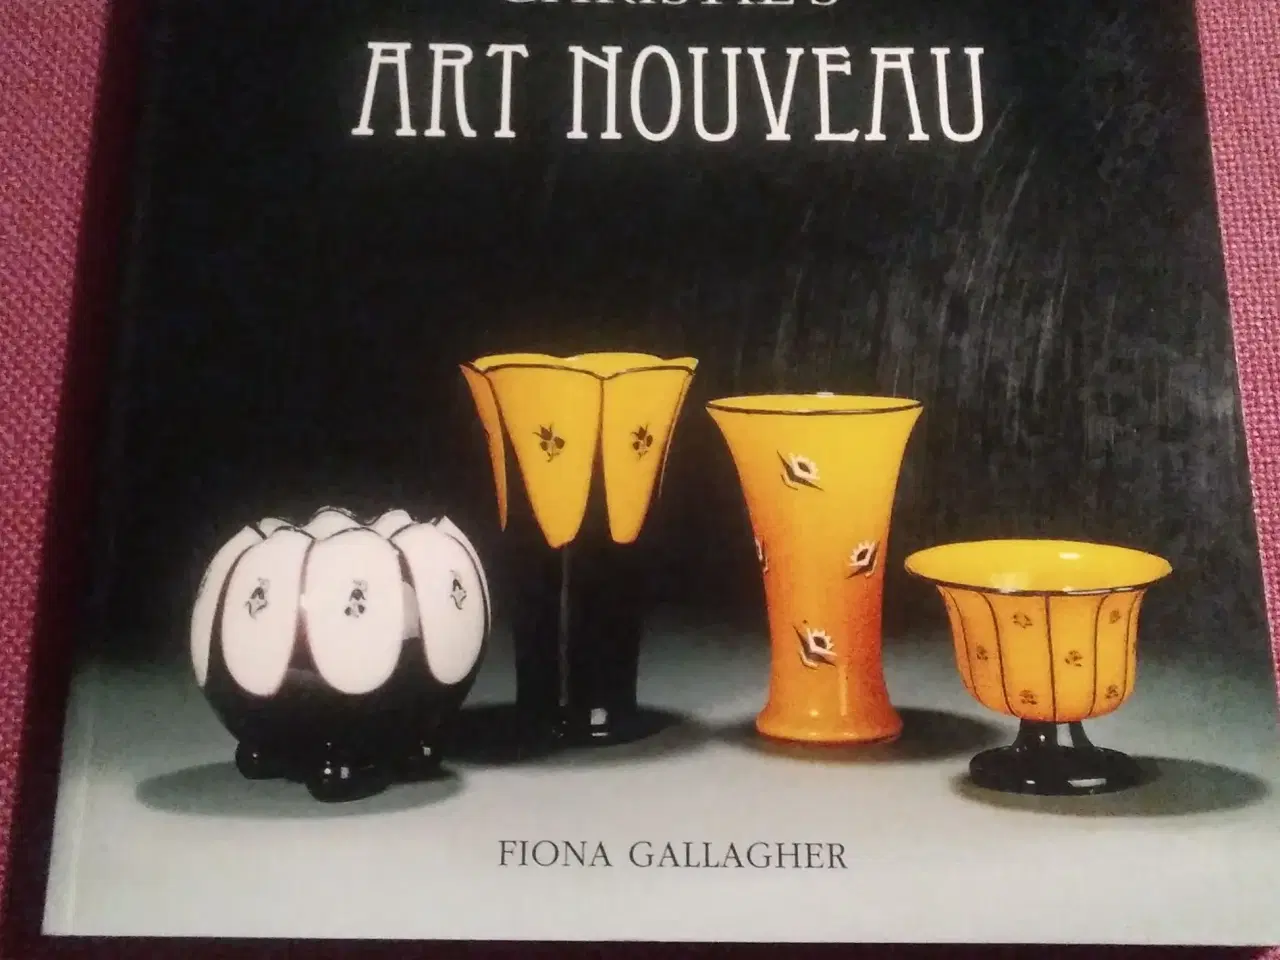 Billede 1 - Art Nouveau bog